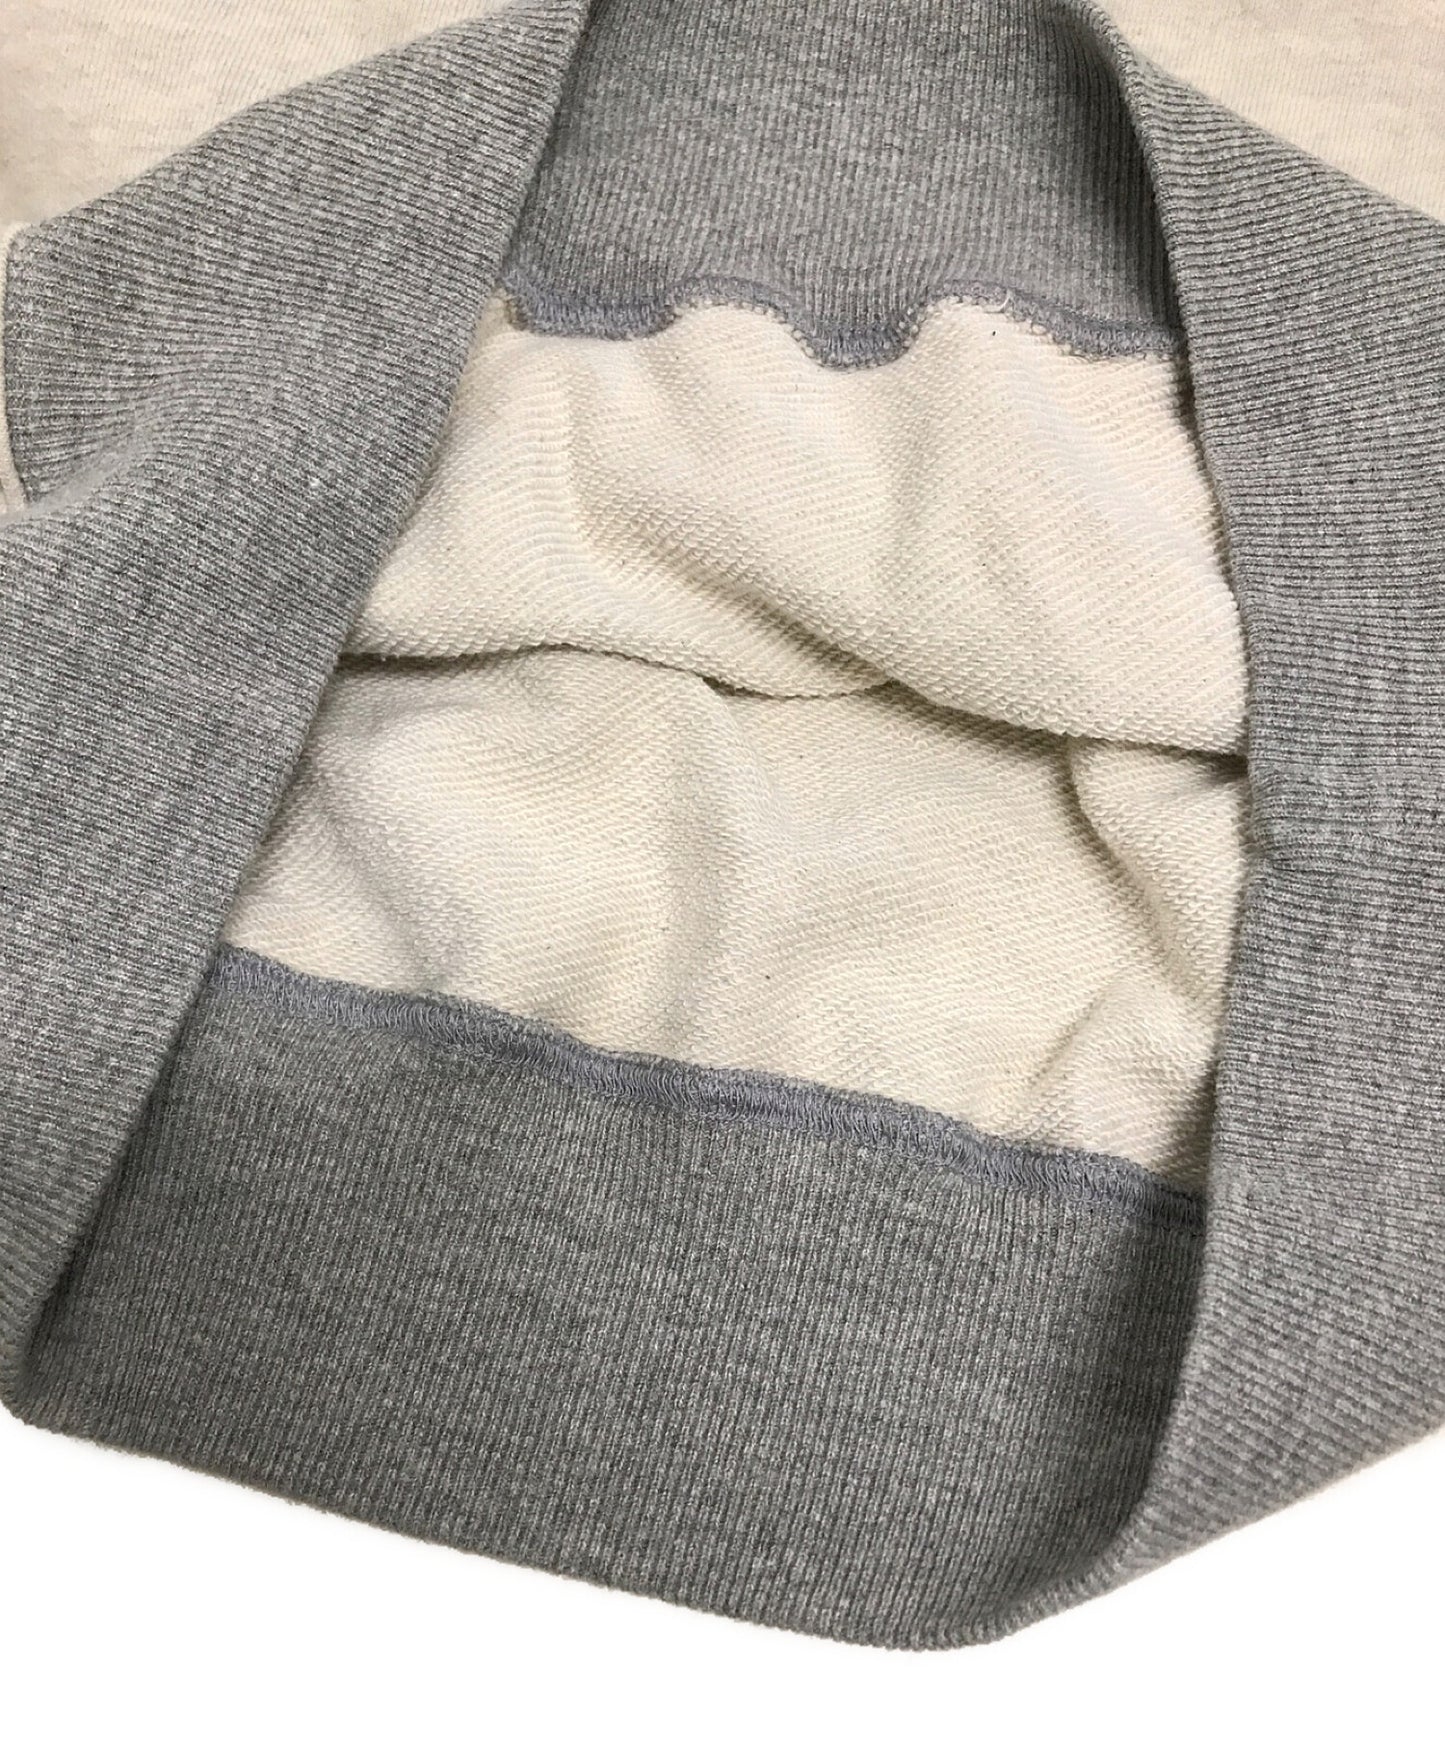 Kapital Top襯裡的皮草Dolman運動衫鋼琴狀態印刷運動衫切割和縫製EK-1131